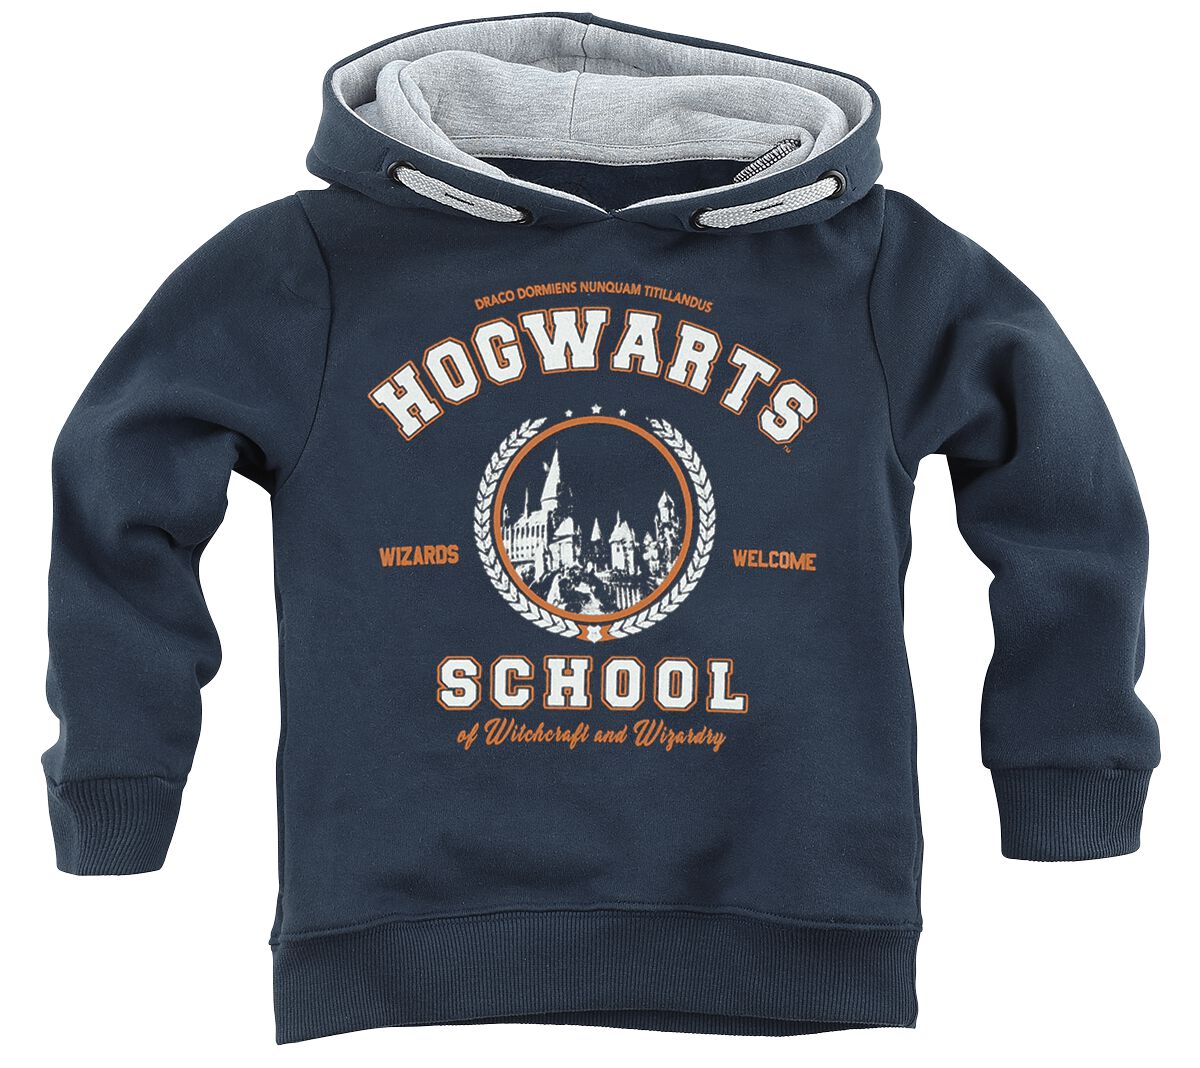 Harry Potter Kapuzenpullover - Kids - Hogwarts School - 116 - Größe 116 - navy  - EMP exklusives Merchandise!